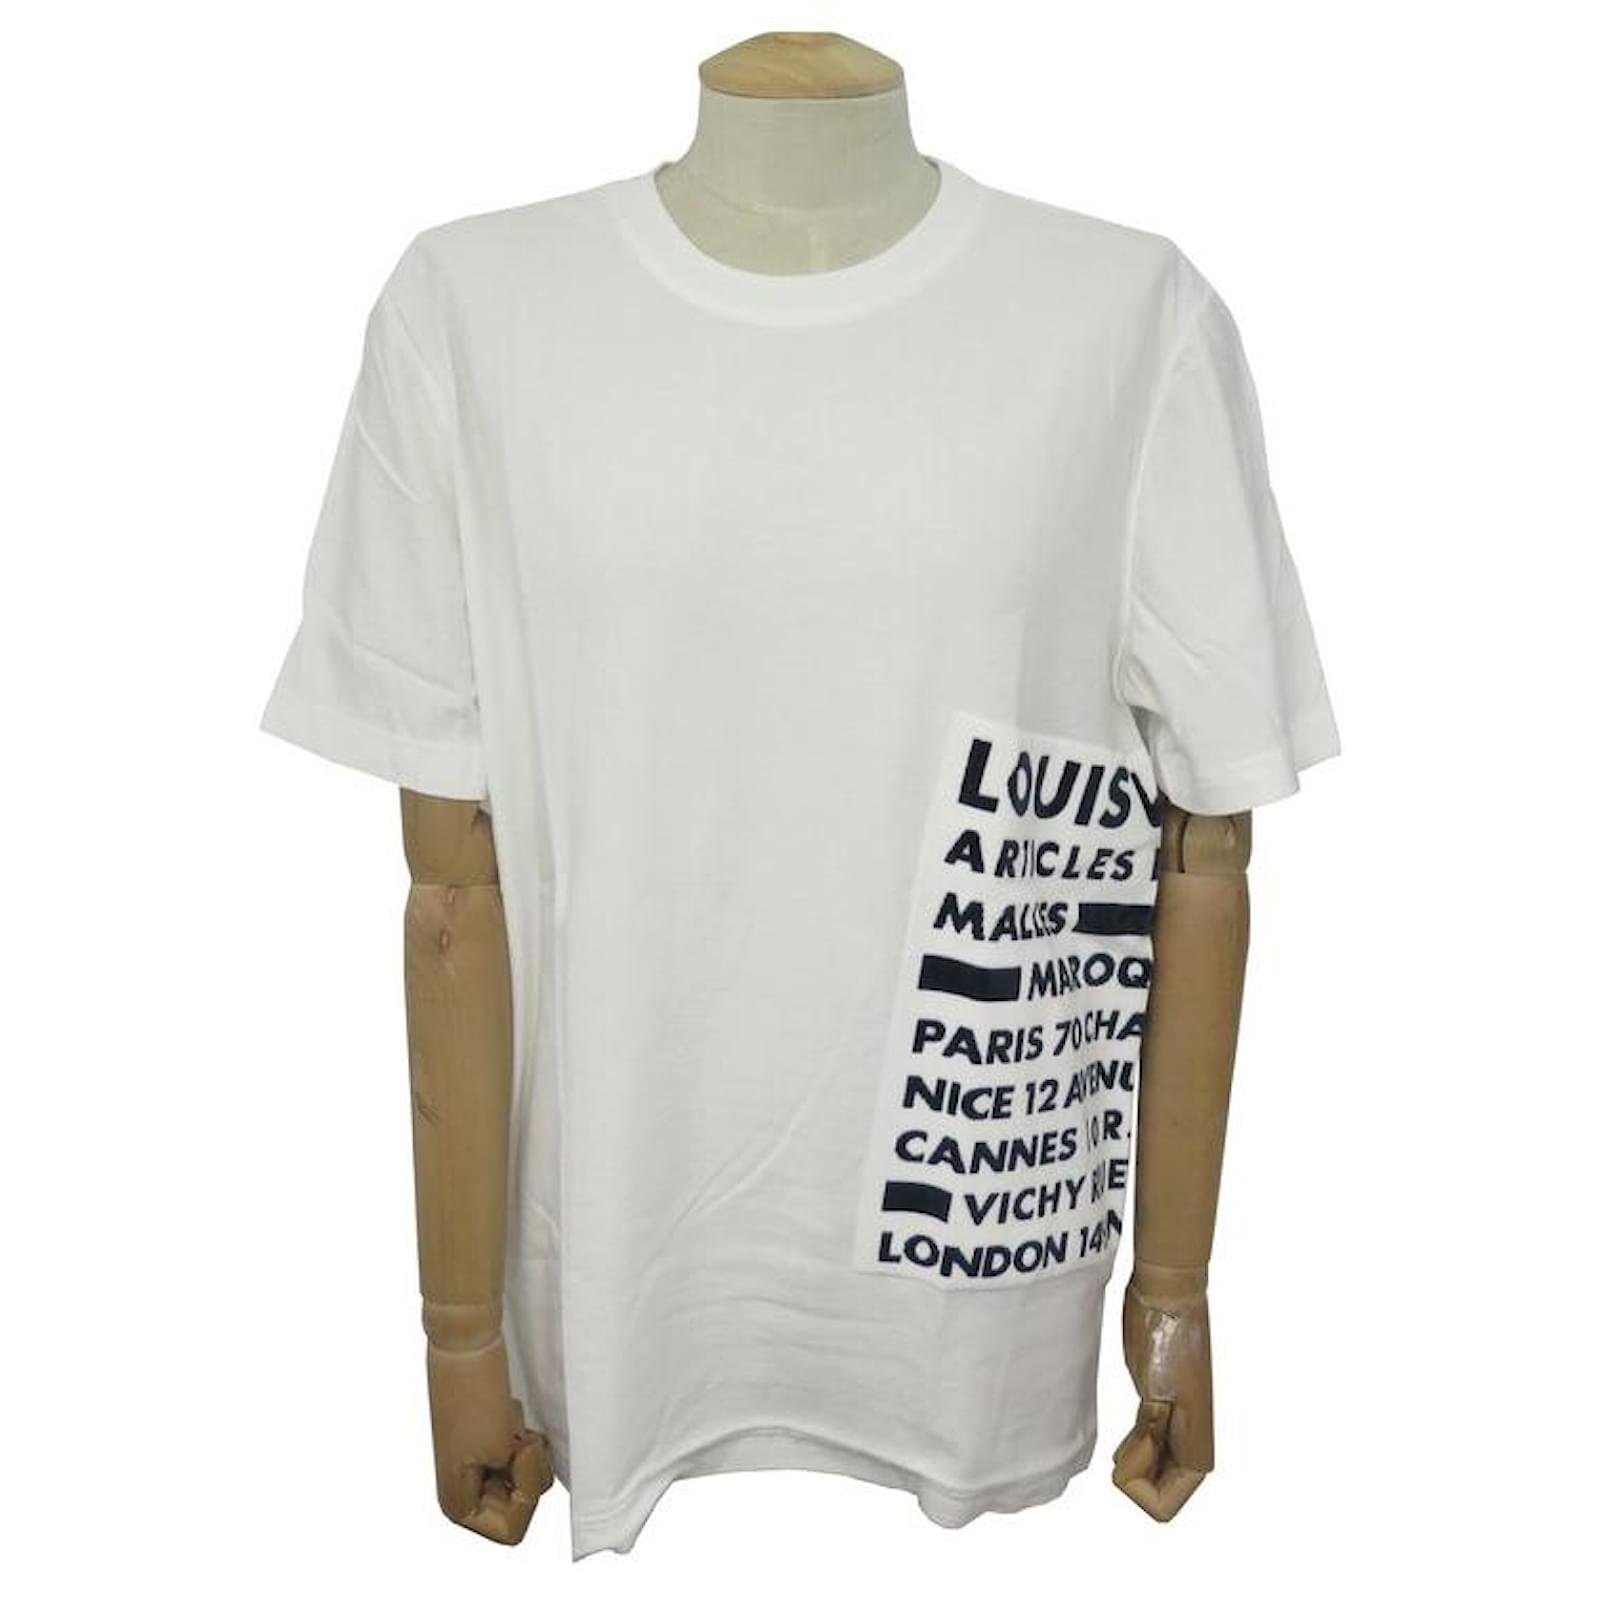 Louis Xiv T-Shirts for Sale